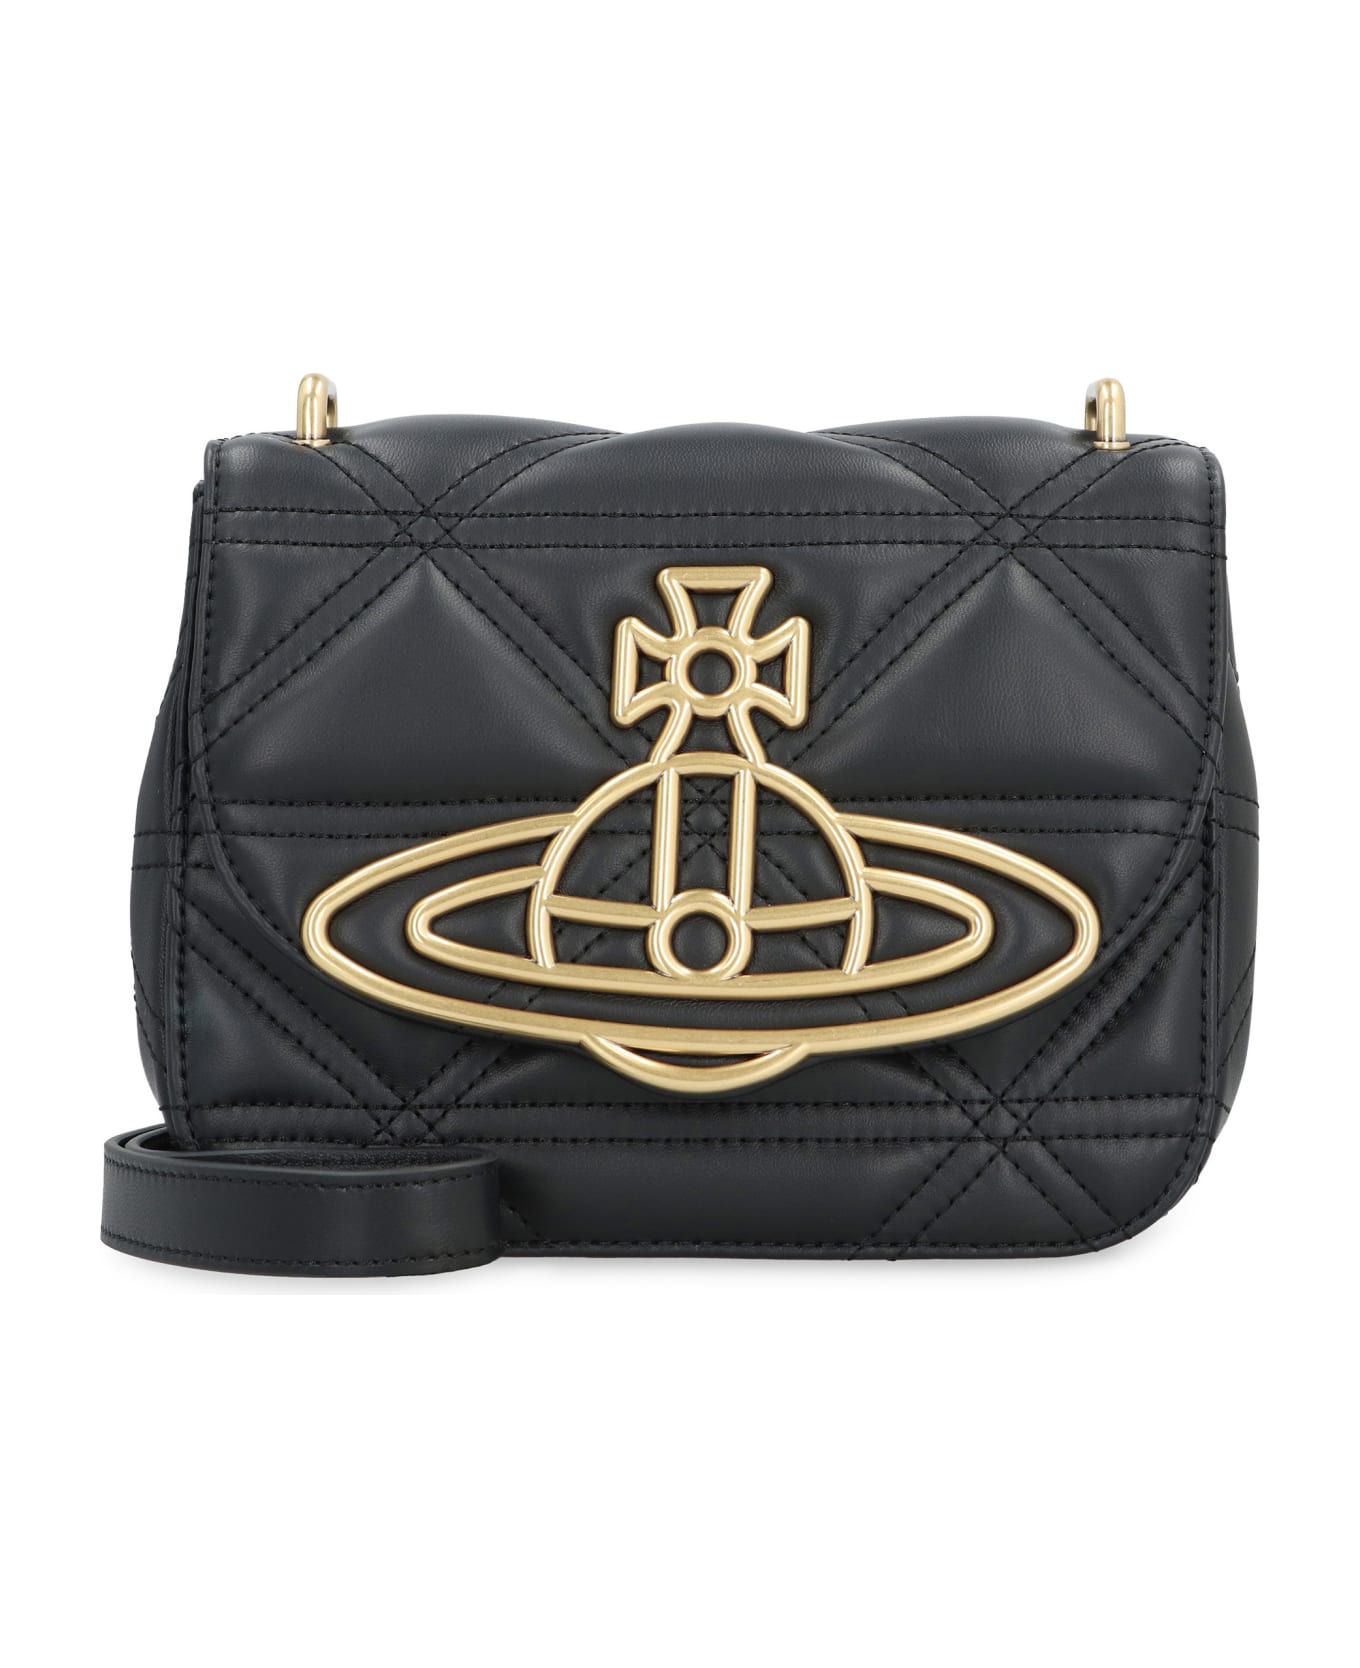 Vivienne Westwood Linda Leather Crossbody Bag - BLACK